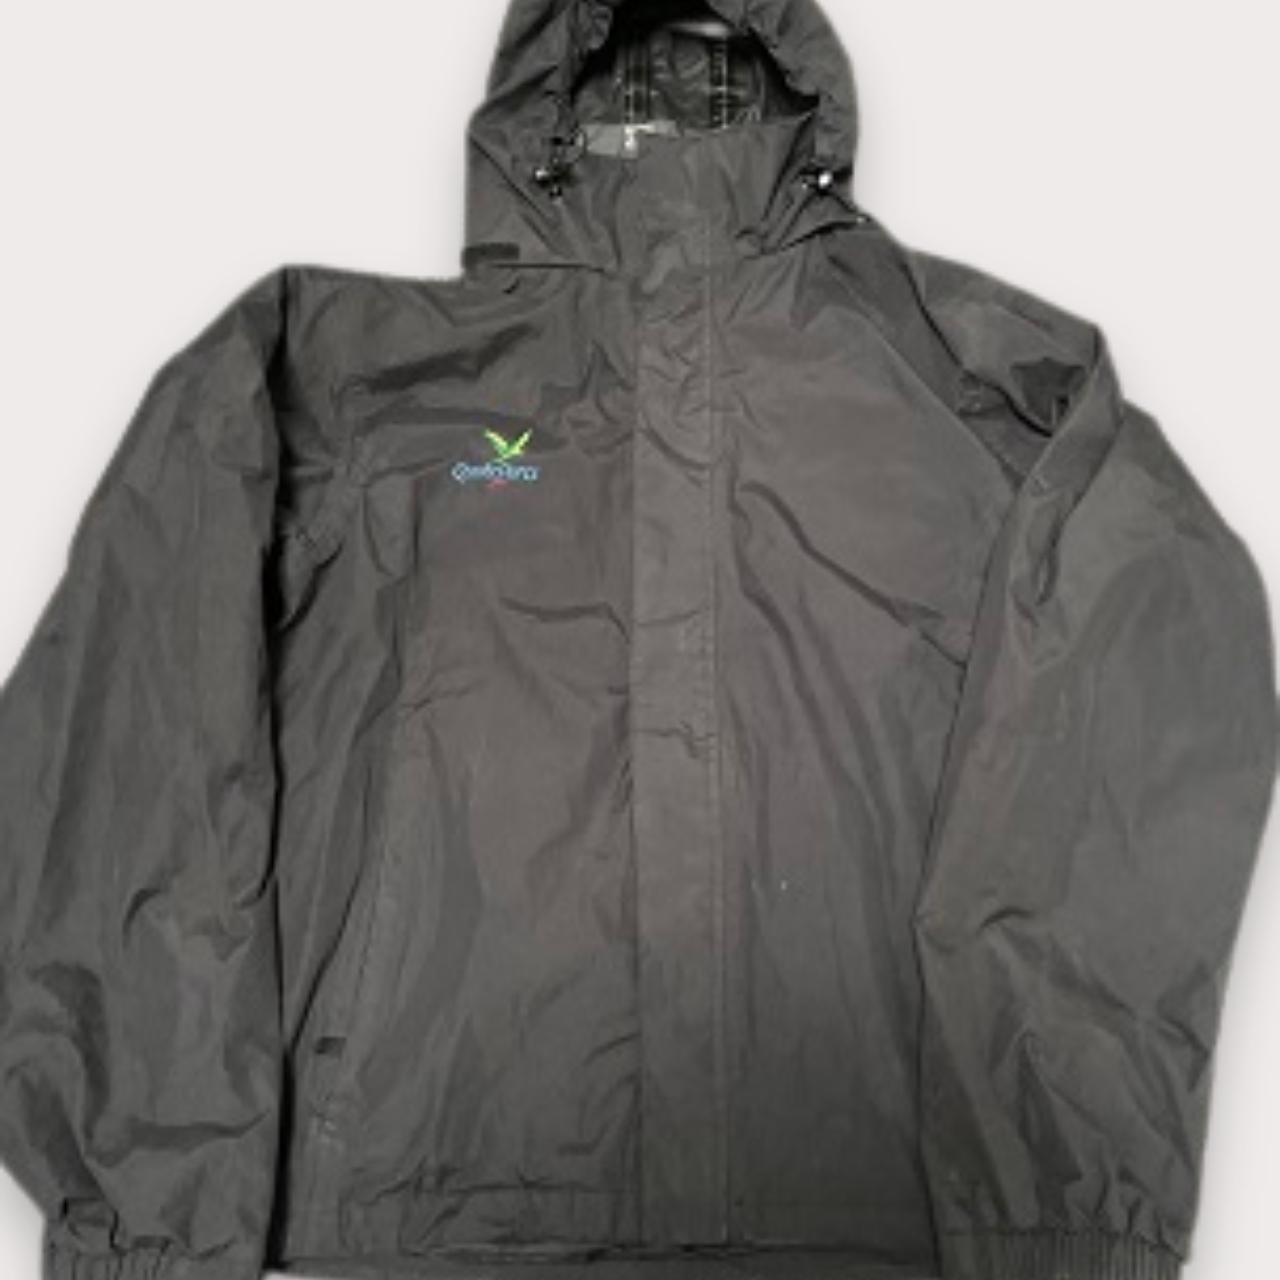 Vintage Regatta professional windbreaker Khaki Brown hoodie jacket size L